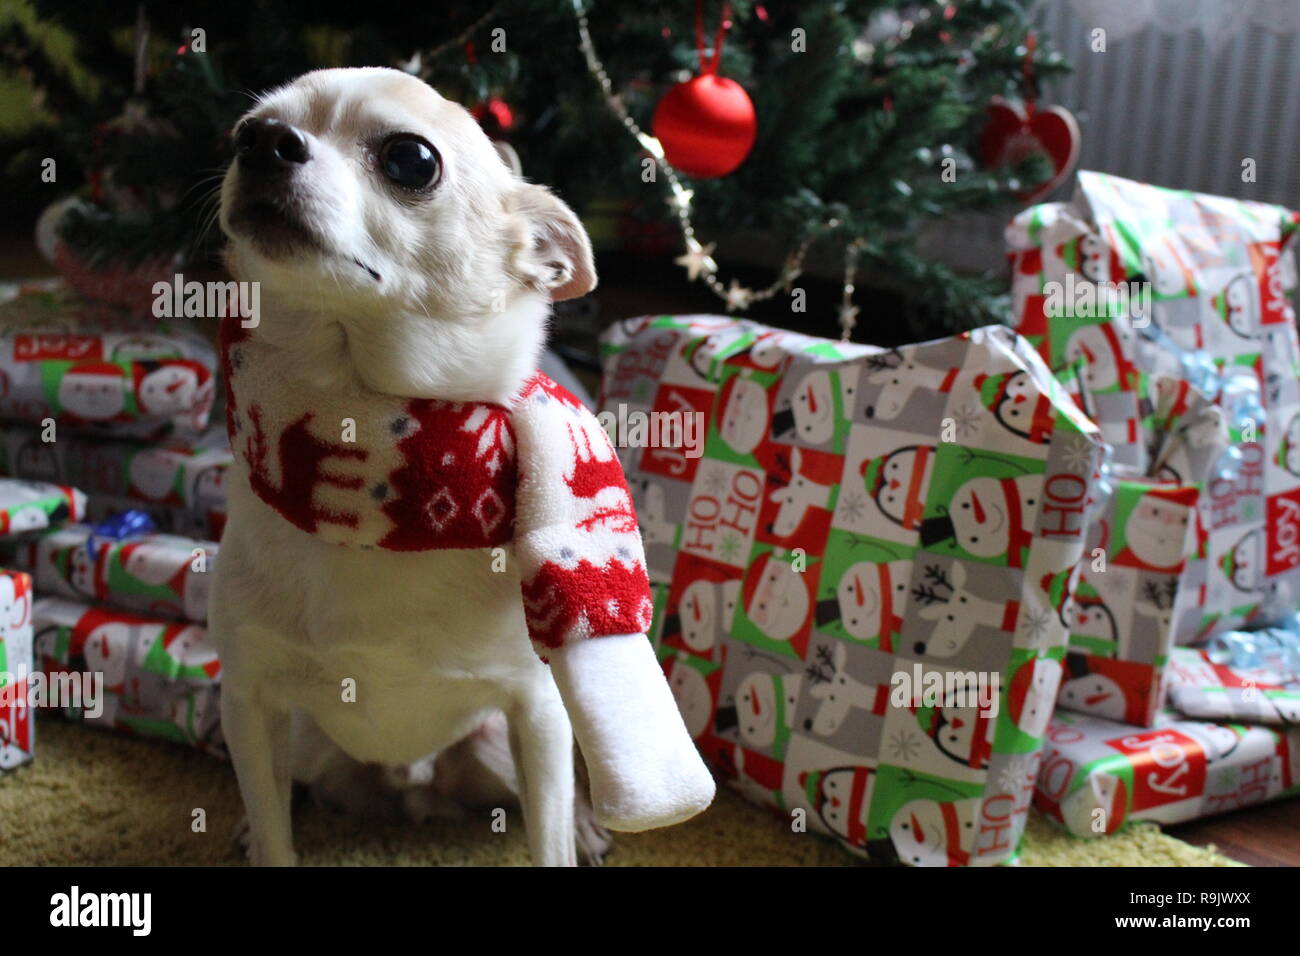 Dog in scarf enjoying Christmas presents. Stock Photo